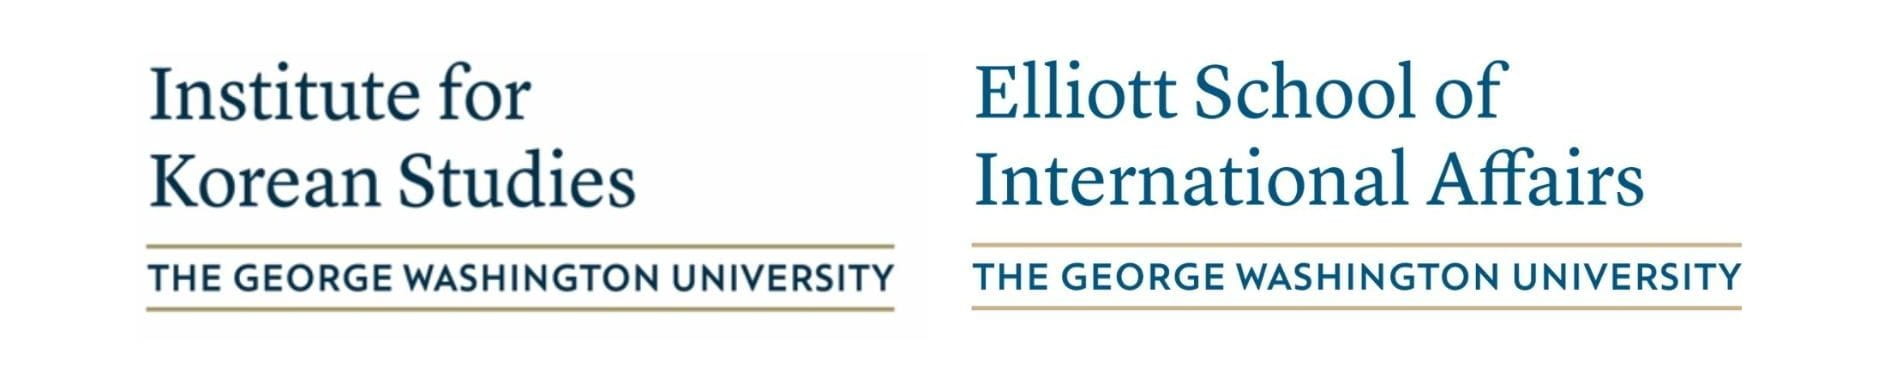 logos of the GW Institute for Korean Studies and Elliott School of International Affairs